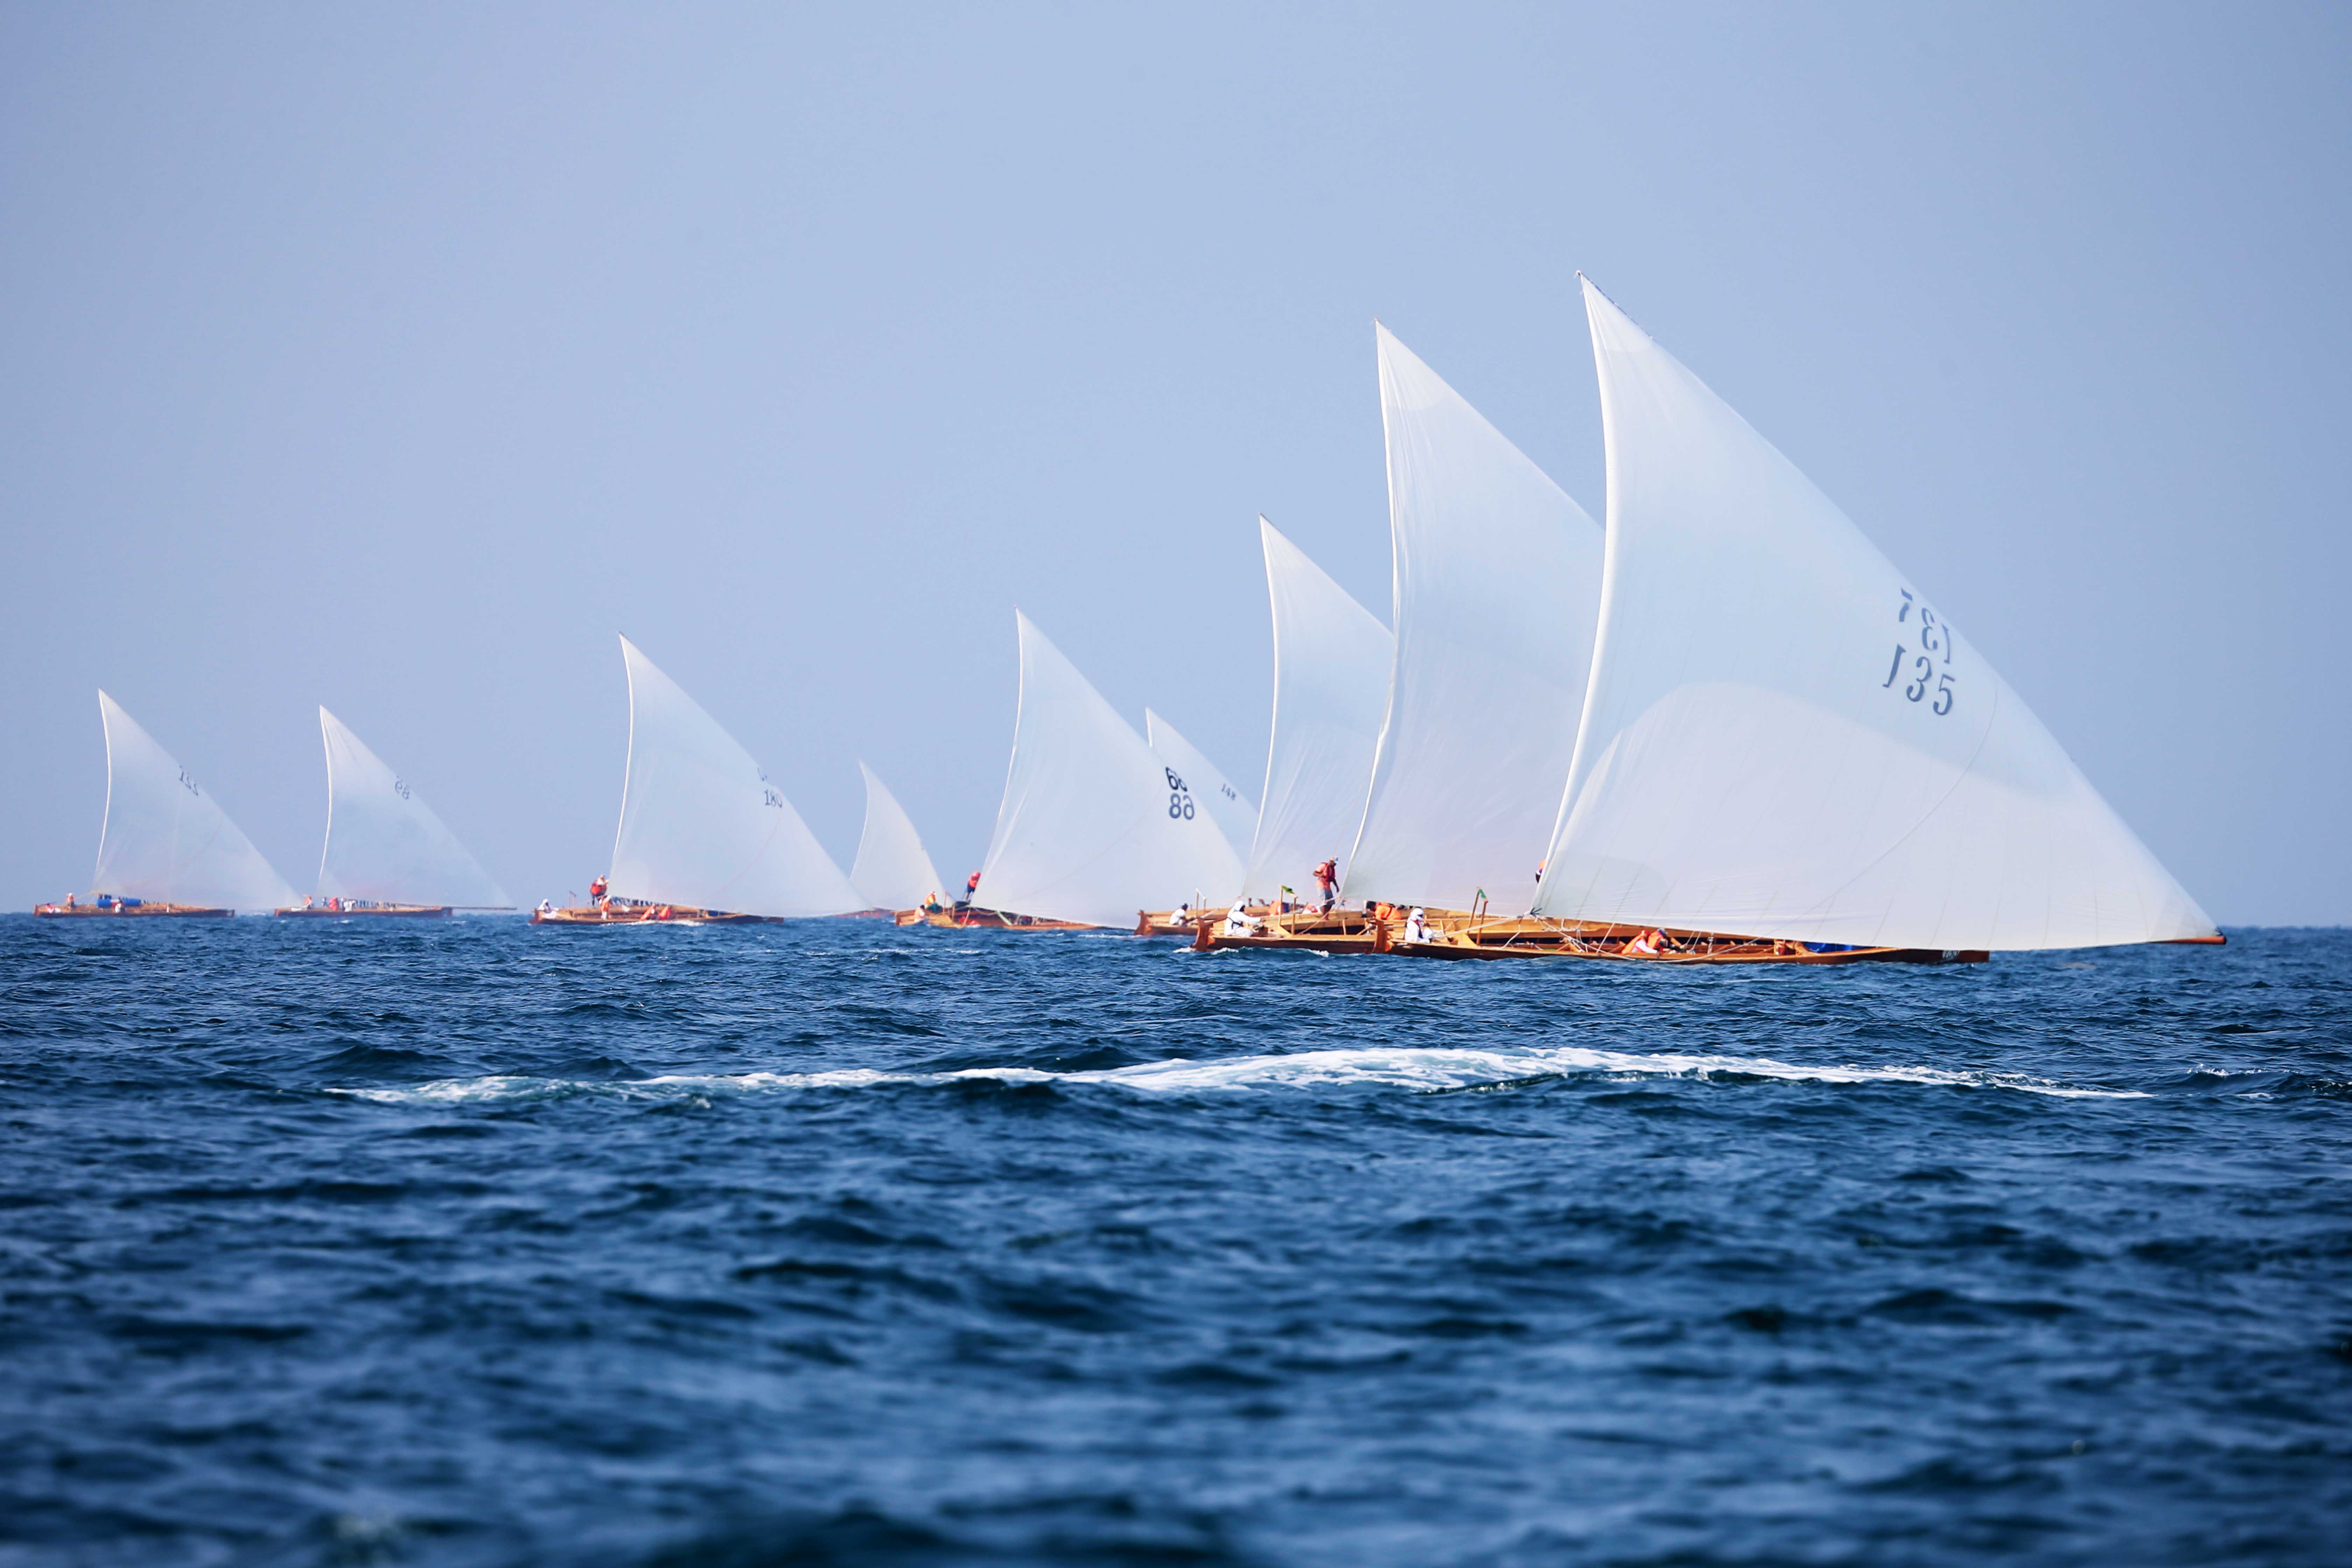 83 boats to hoist their sail today in Dubai